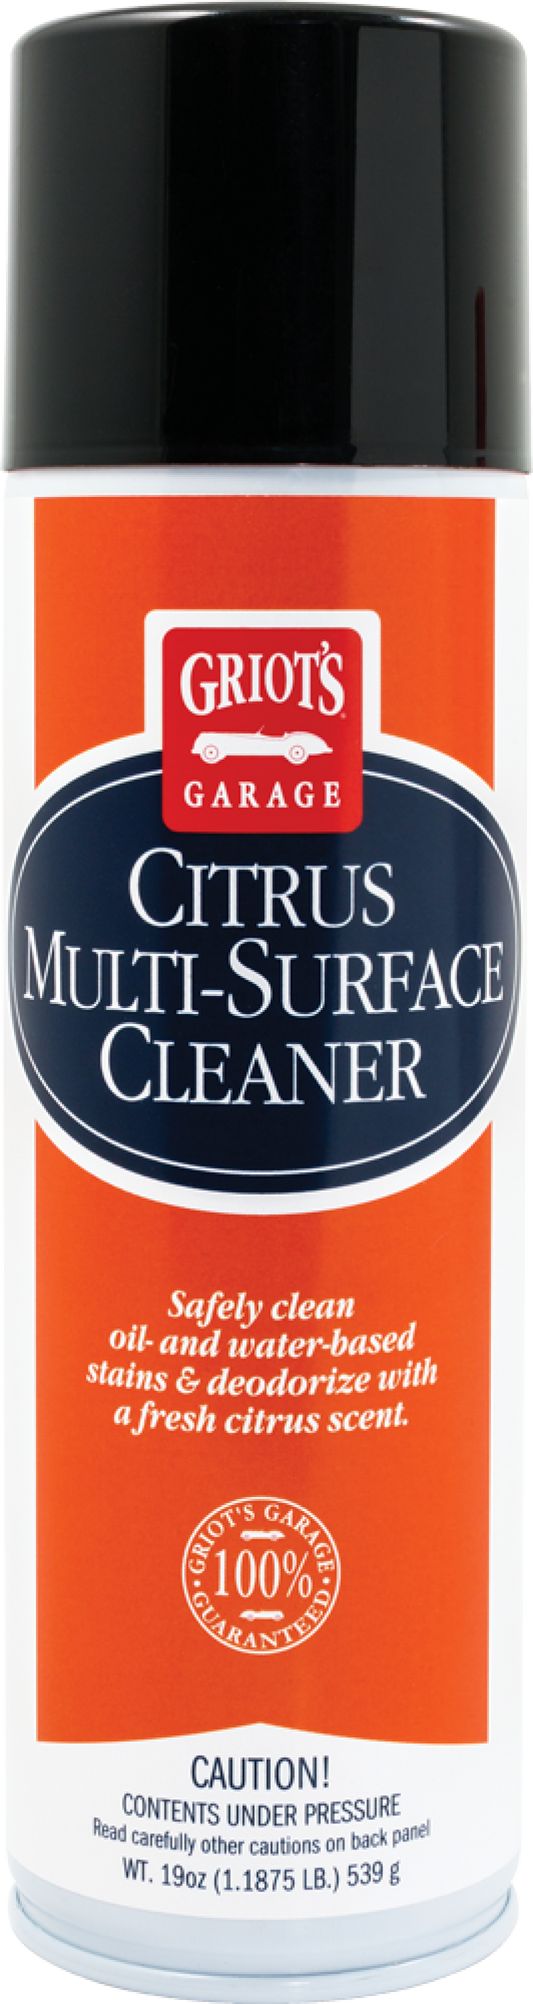 Griots Garage Citrus Multi-Surface Cleaner - 19oz